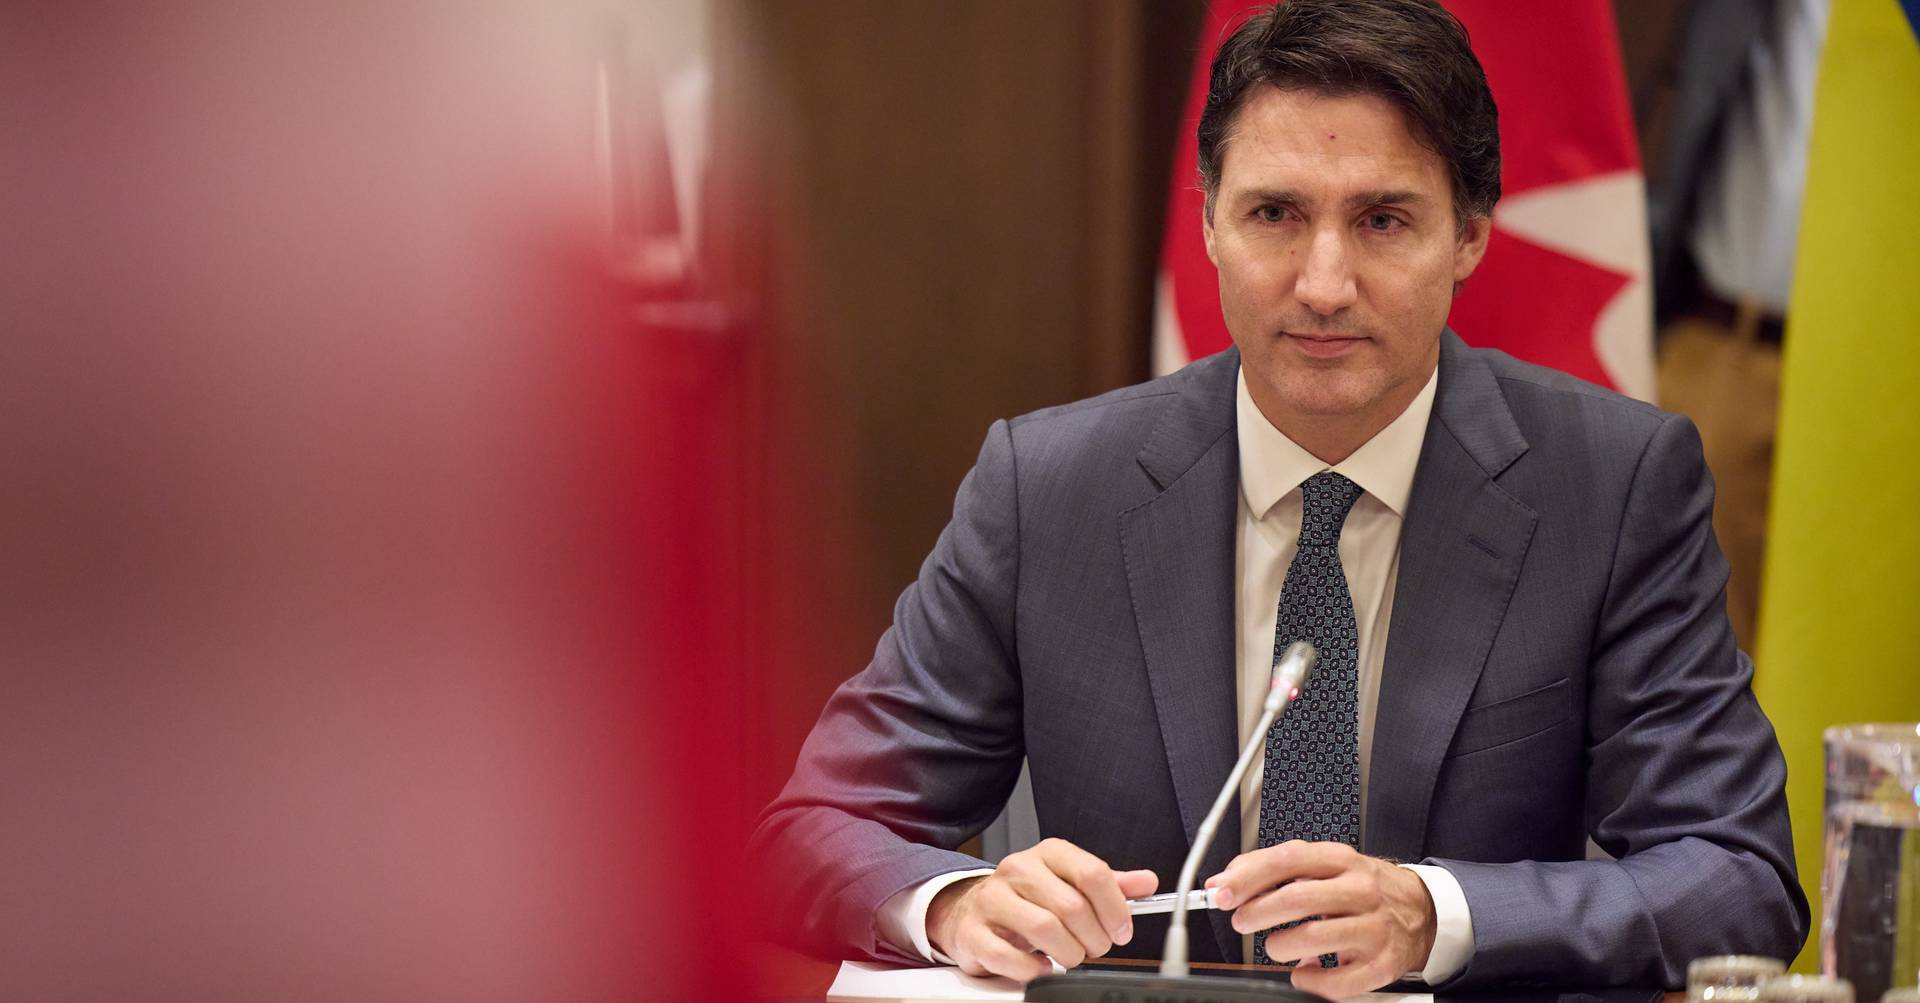 Canadian Prime Minister apologizes for honoring Ukrainian Nazi veteran